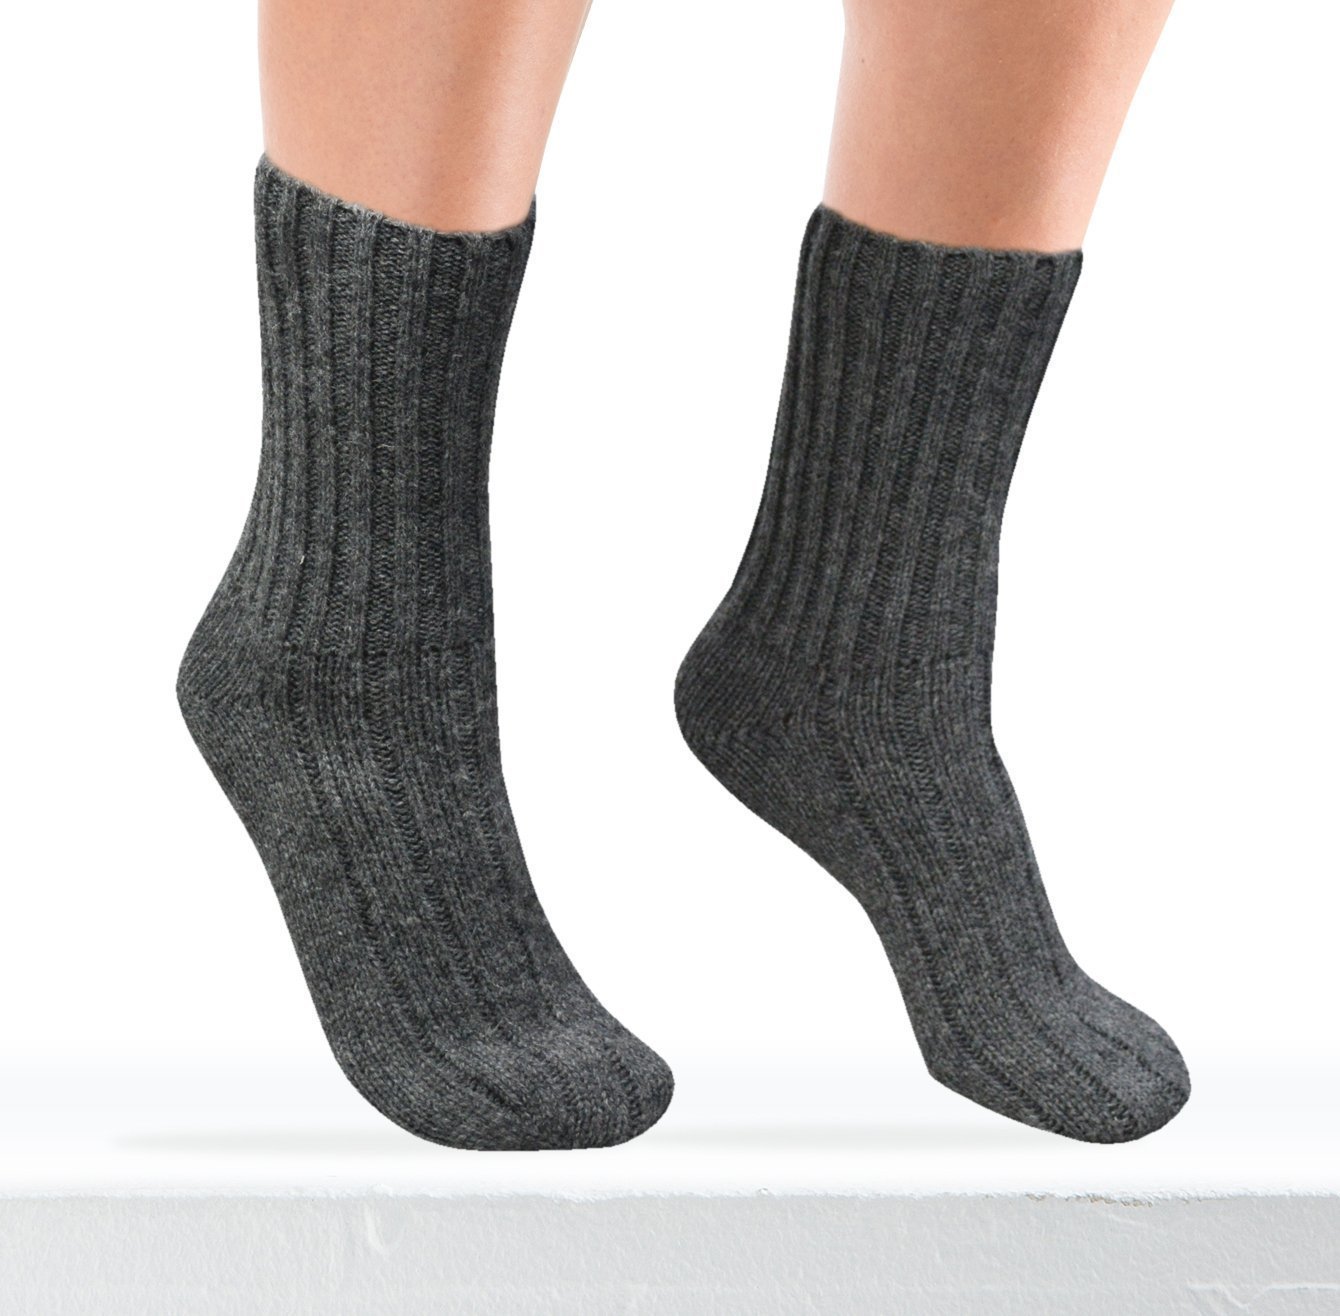 North Outdoor 100 % Merino Wool Socks - Made in Finland, Graphite Grey / 35-38